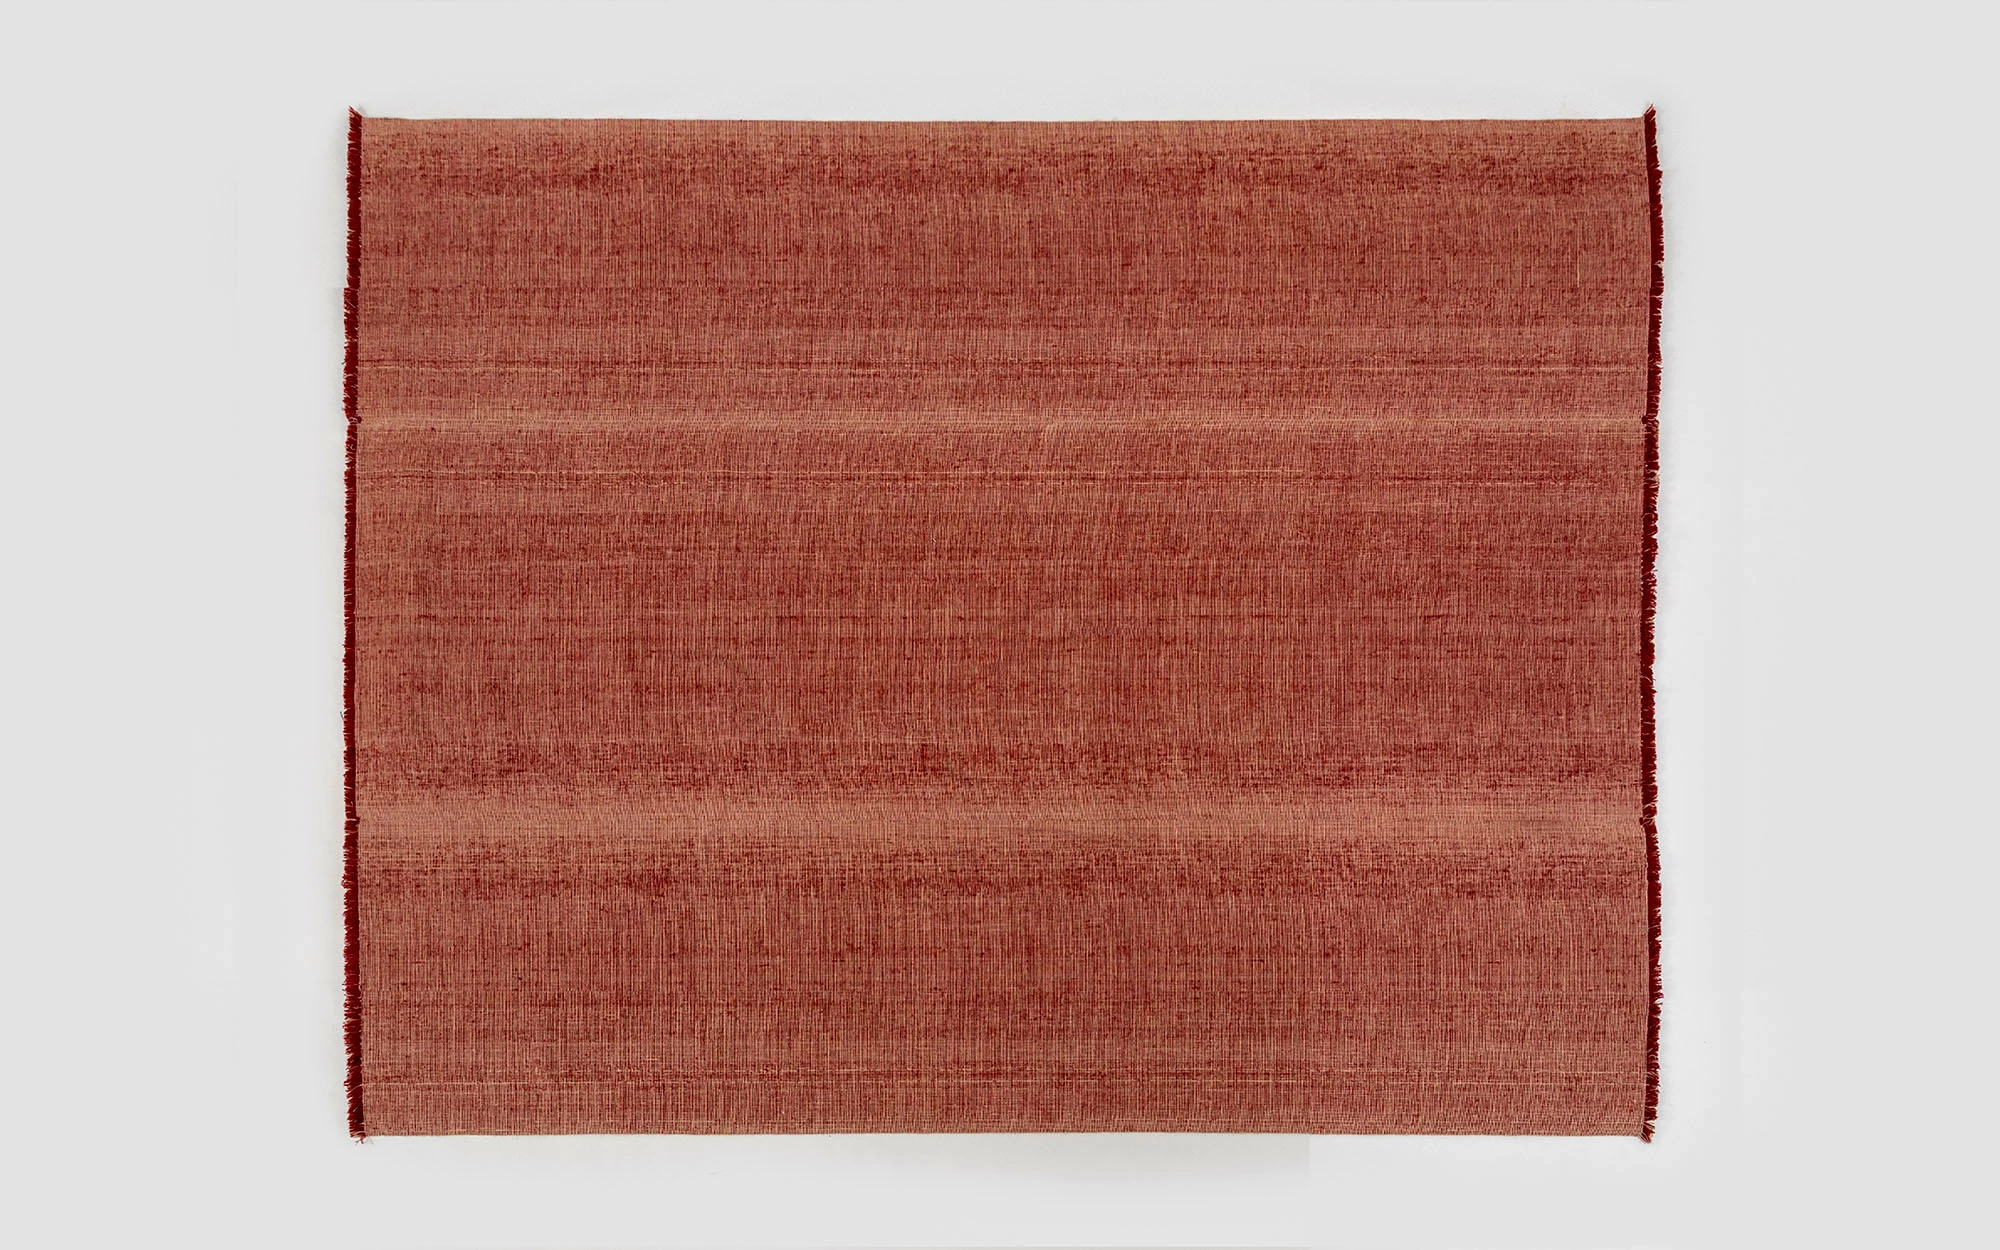 Wilton Carpet S - Ronan & Erwan Bouroullec - carpet - Galerie kreo